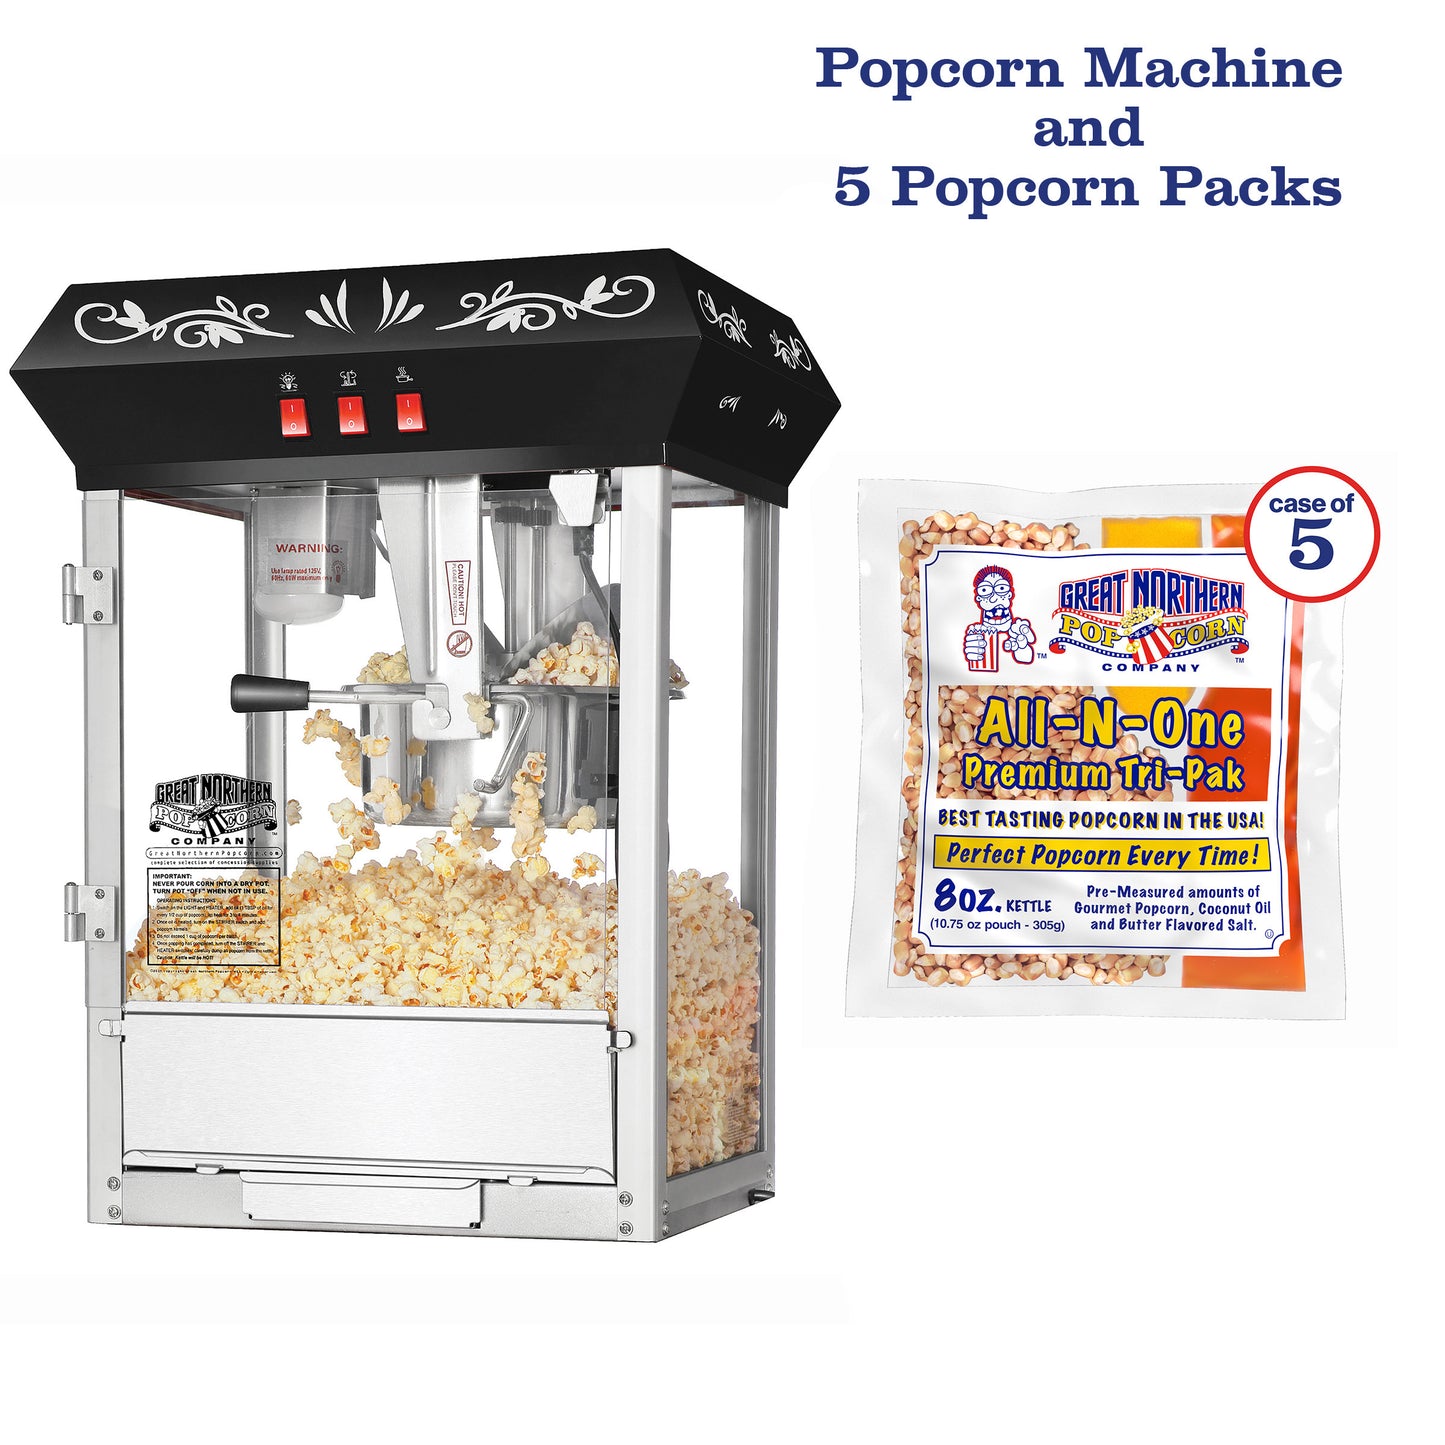 Foundation Countertop Popcorn Machine and Popcorn